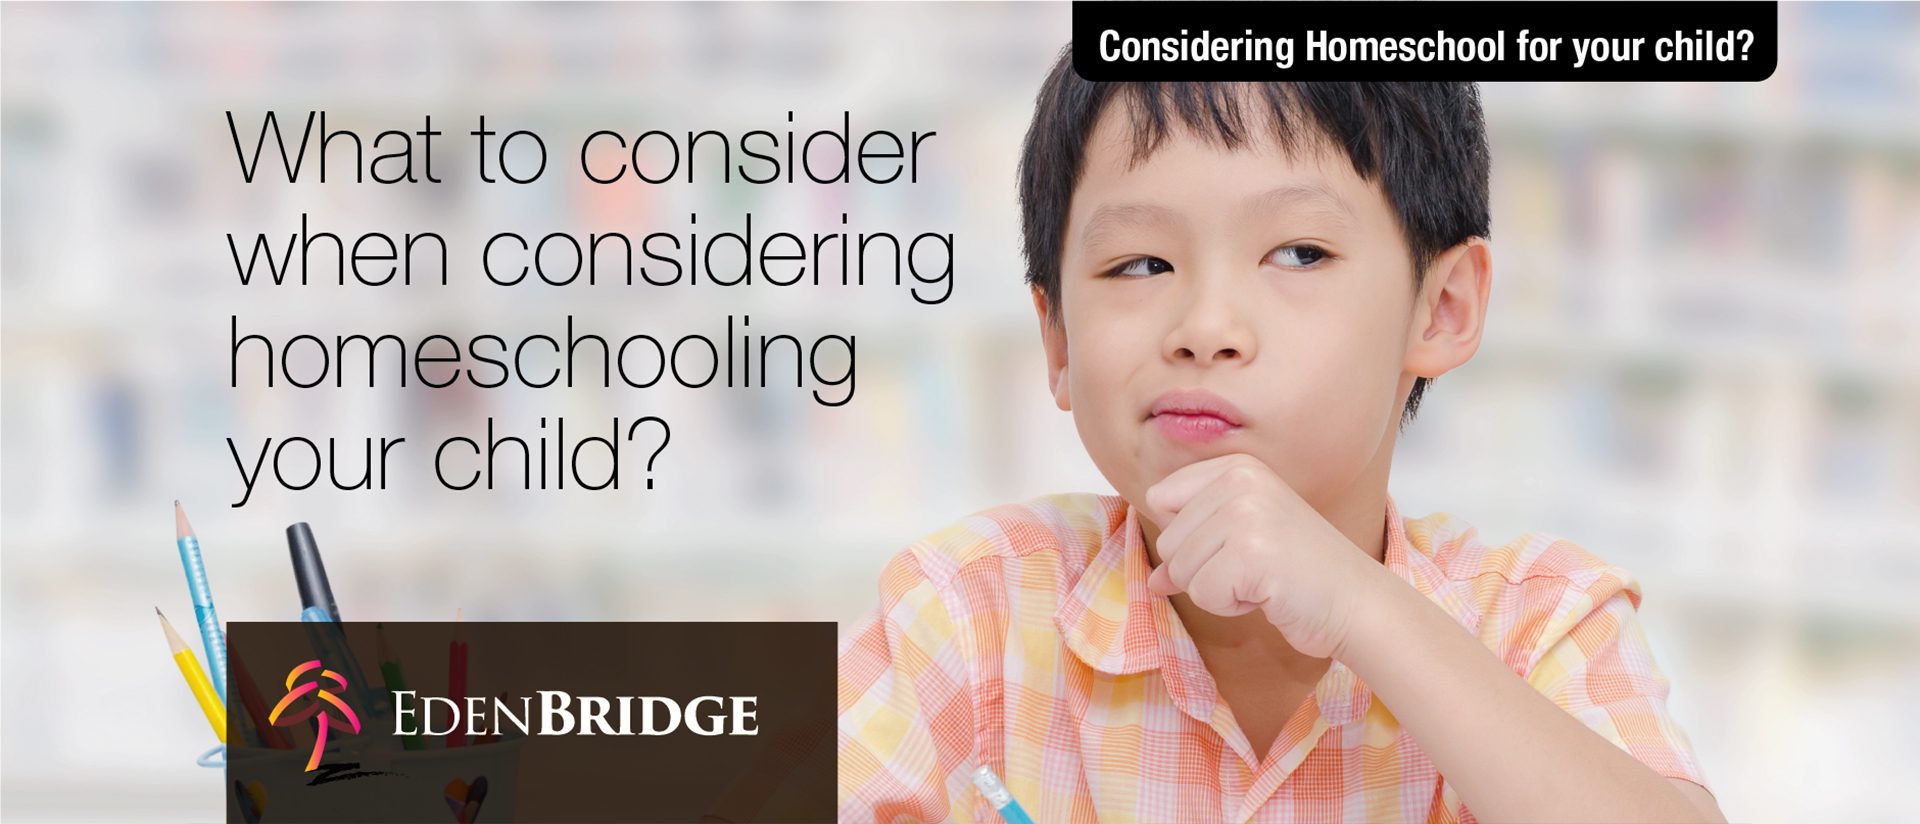 edenbridge-homeschooling-malaysia-02